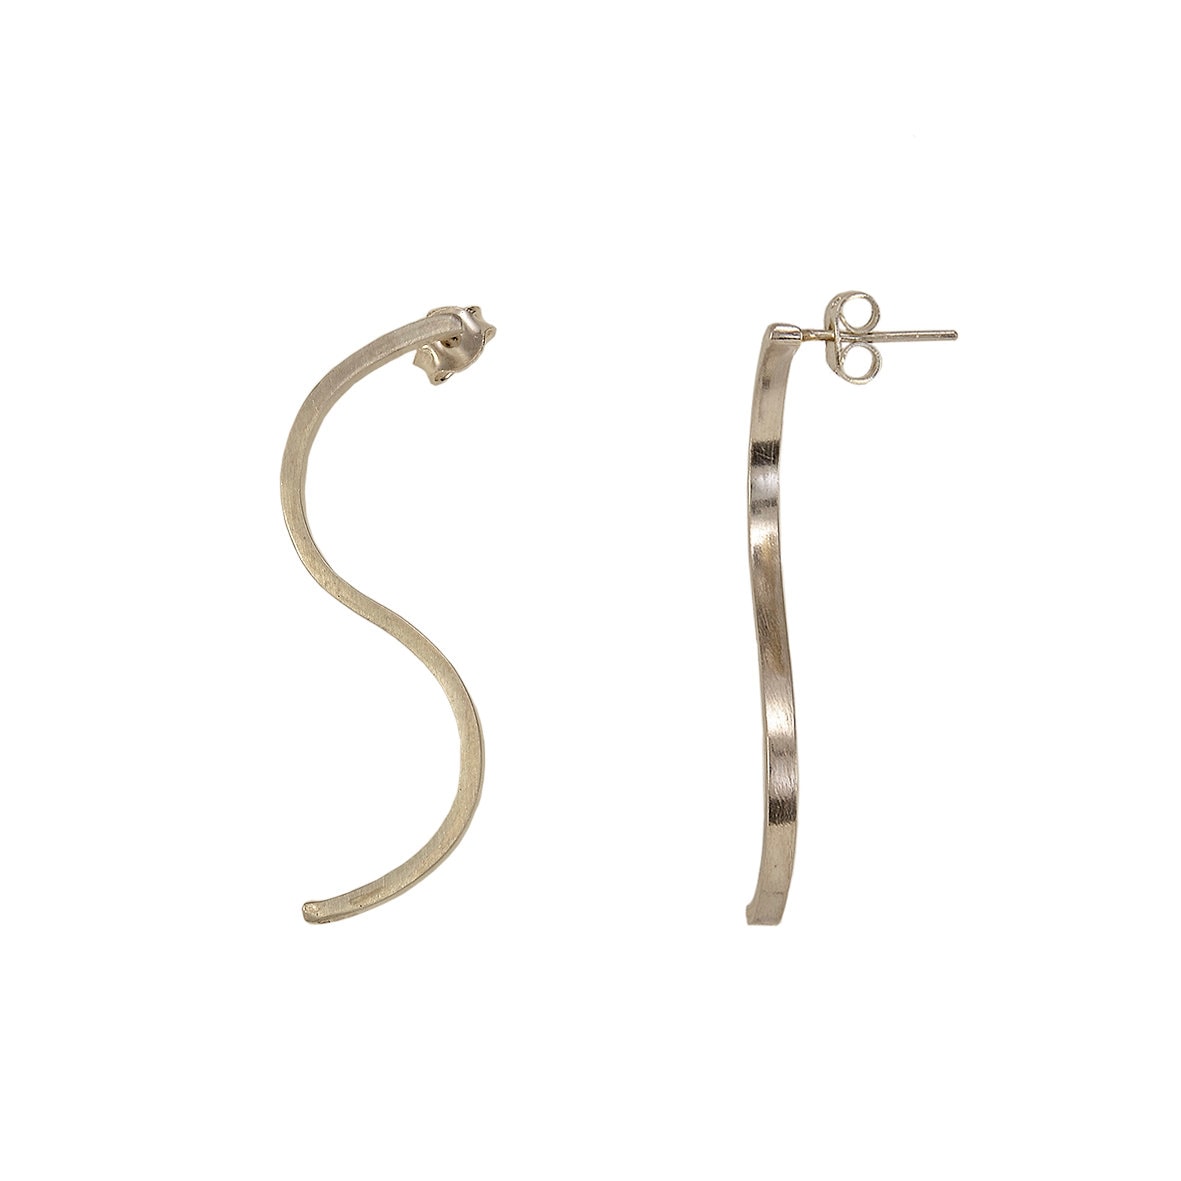 Sterling silver curvy bar stud earrings , now with free shipping ! etsy.me/3ip7sTZ #silverearrings #anniversarygift #symbol #geometric #pushback #,barearrings #minimalist #earlobe